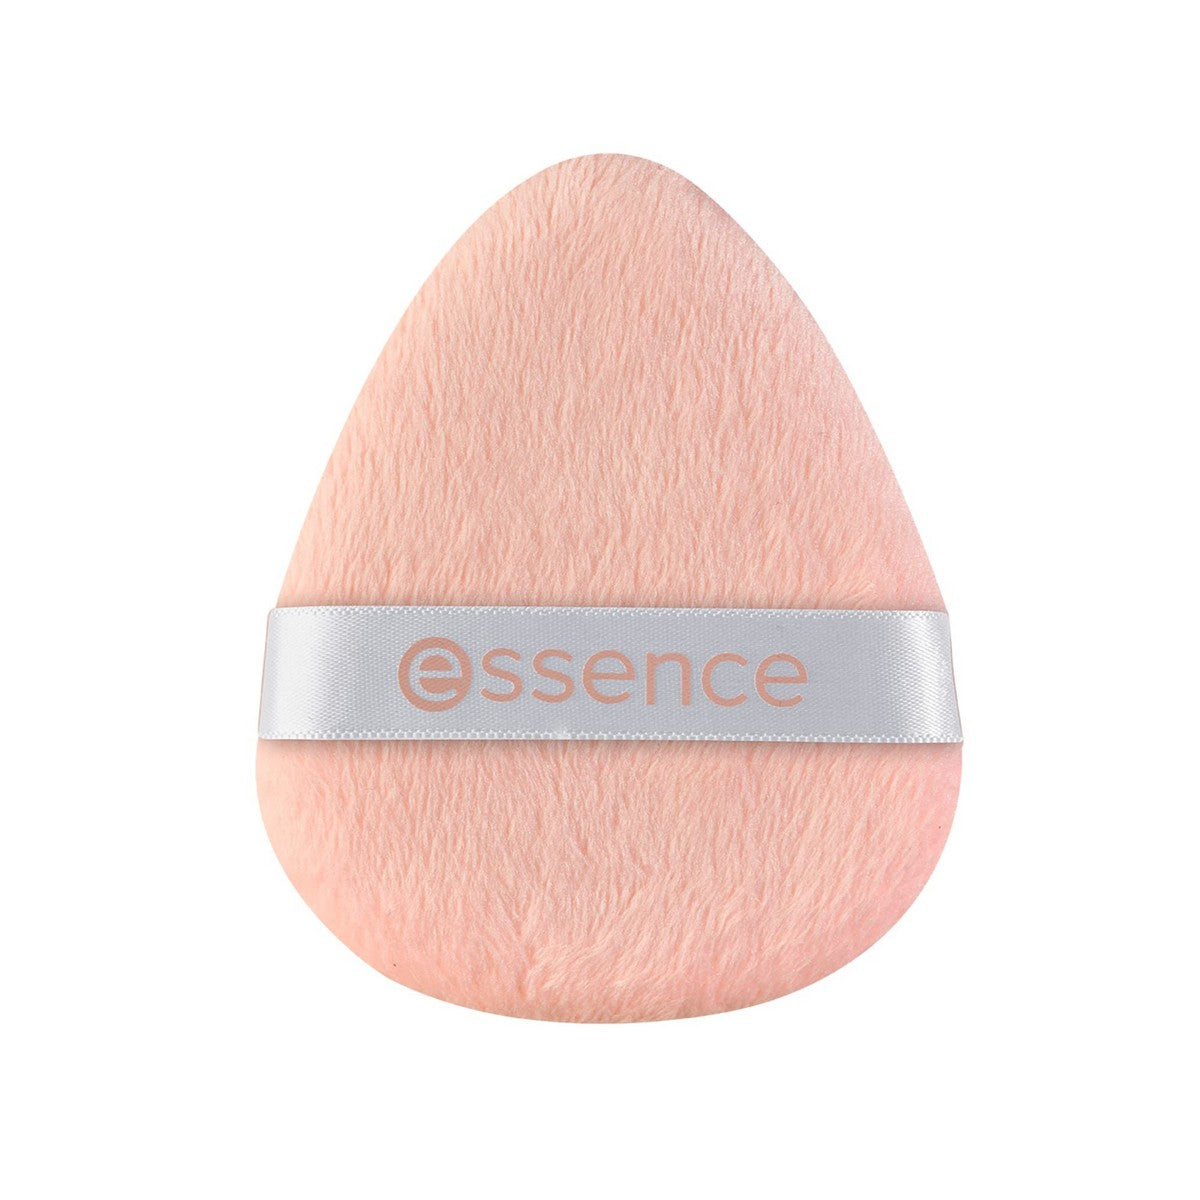 Make-up Sponge Essence Esponja Use Airbrush Multi-use (1 Unit)